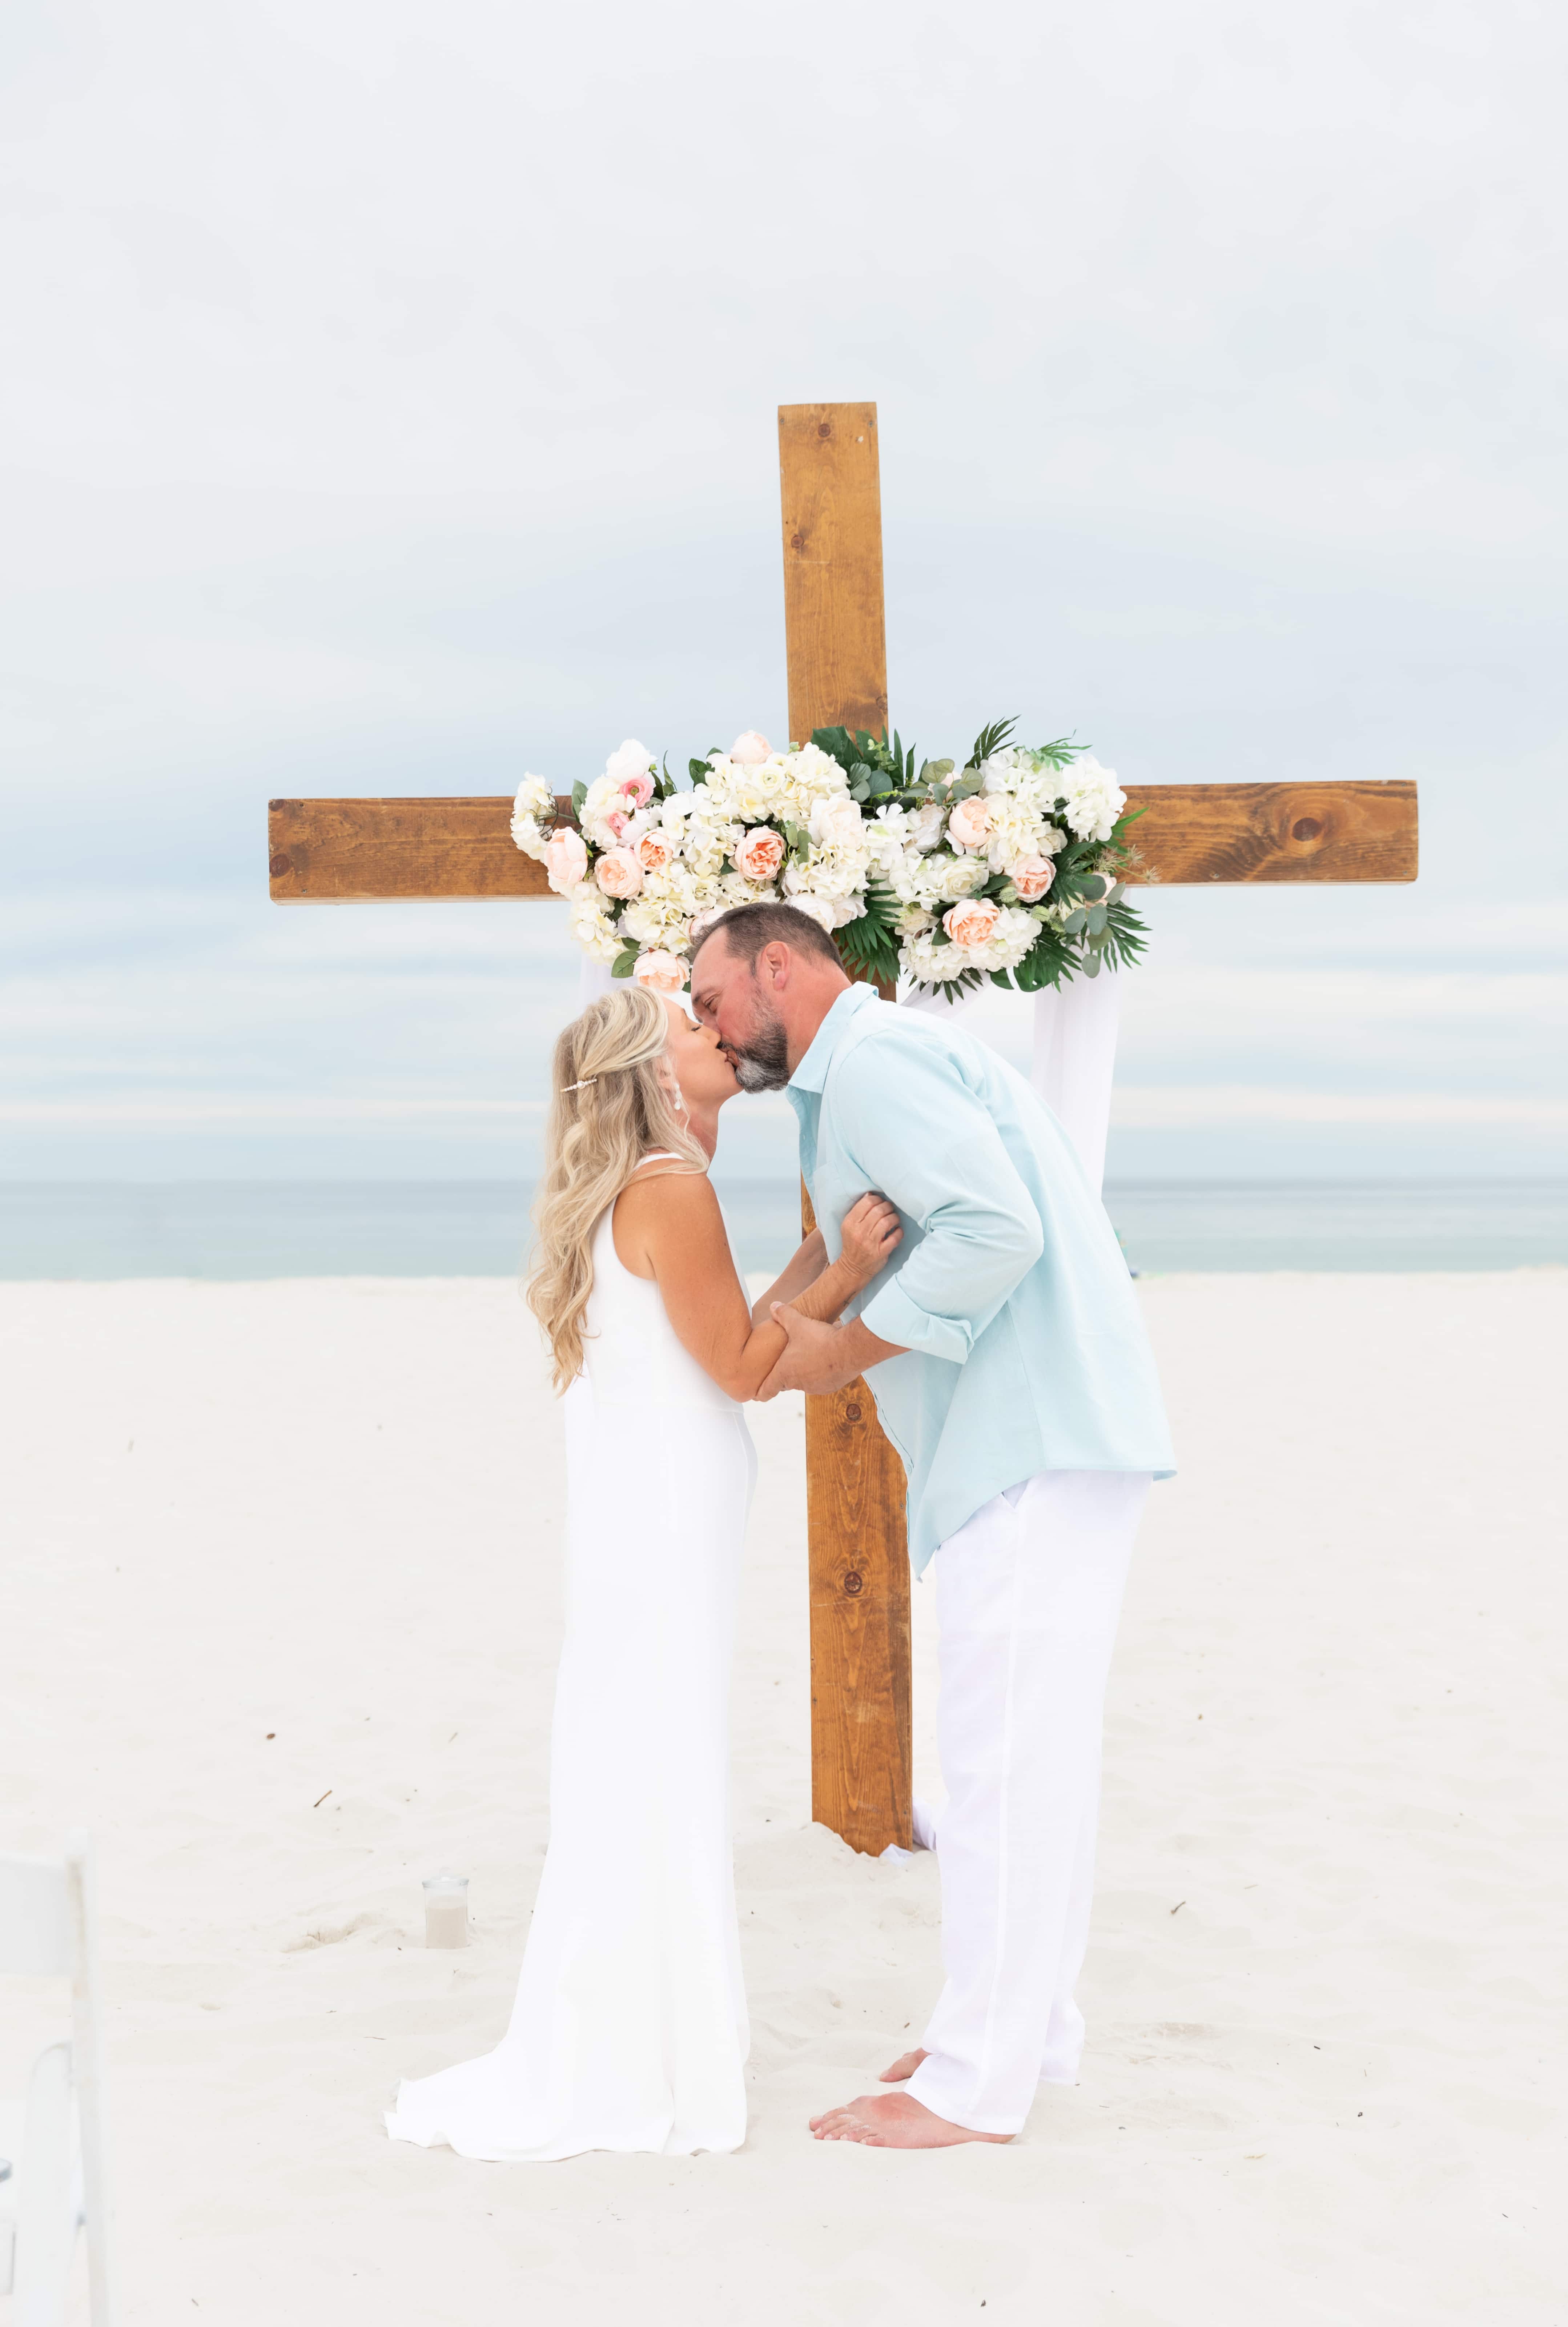 The Cross beach wedding package